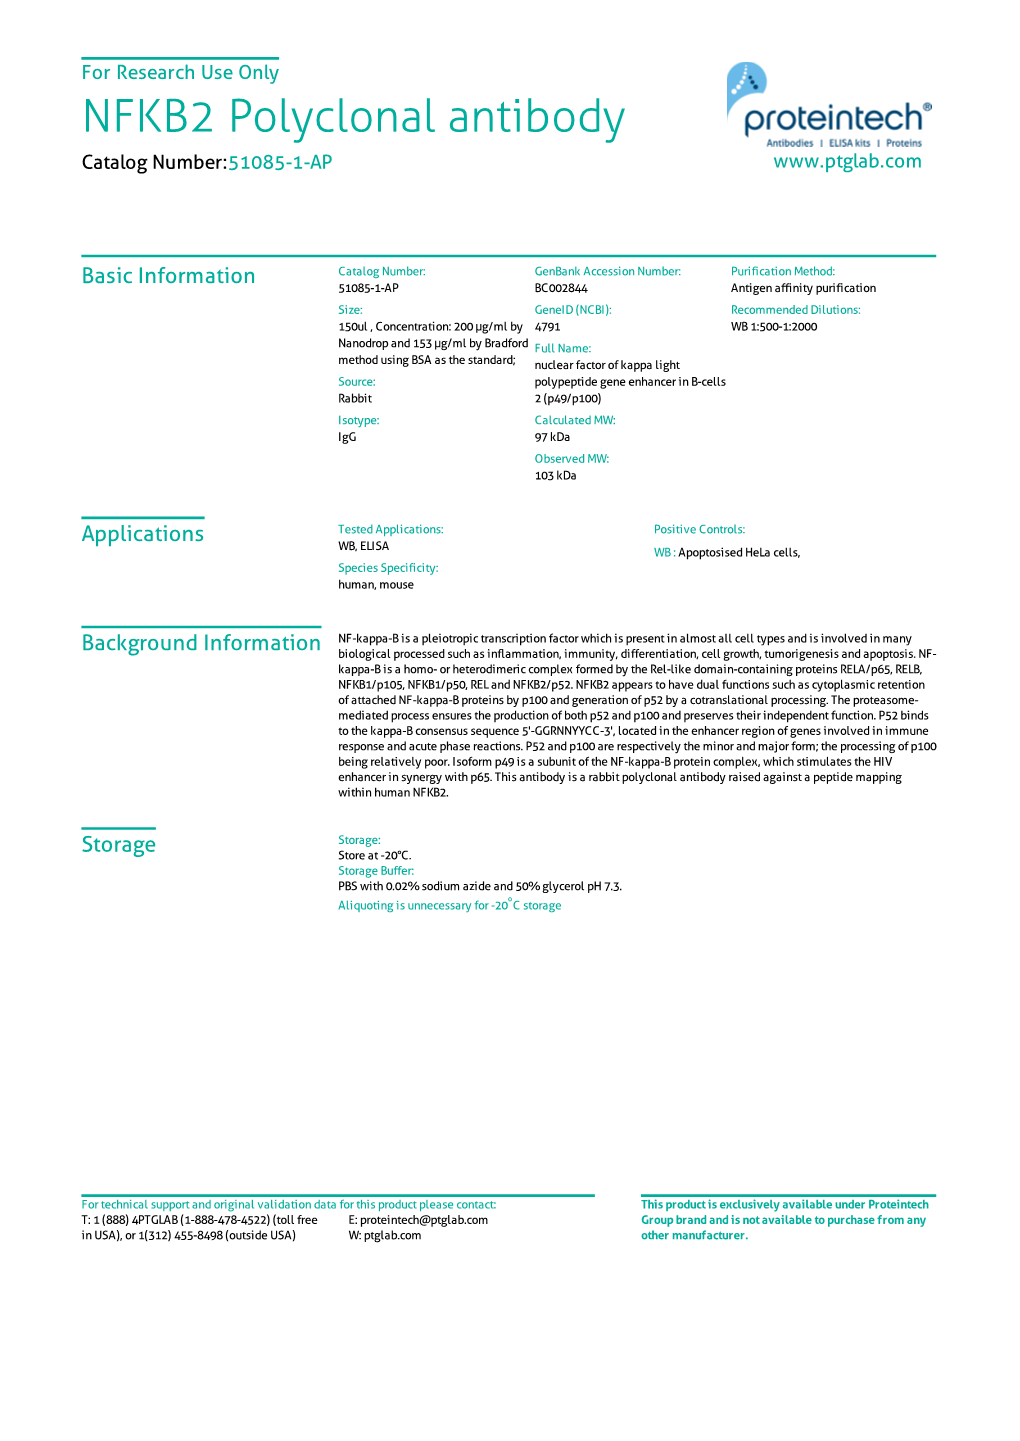 NFKB2 Polyclonal Antibody Catalog Number:51085-1-AP